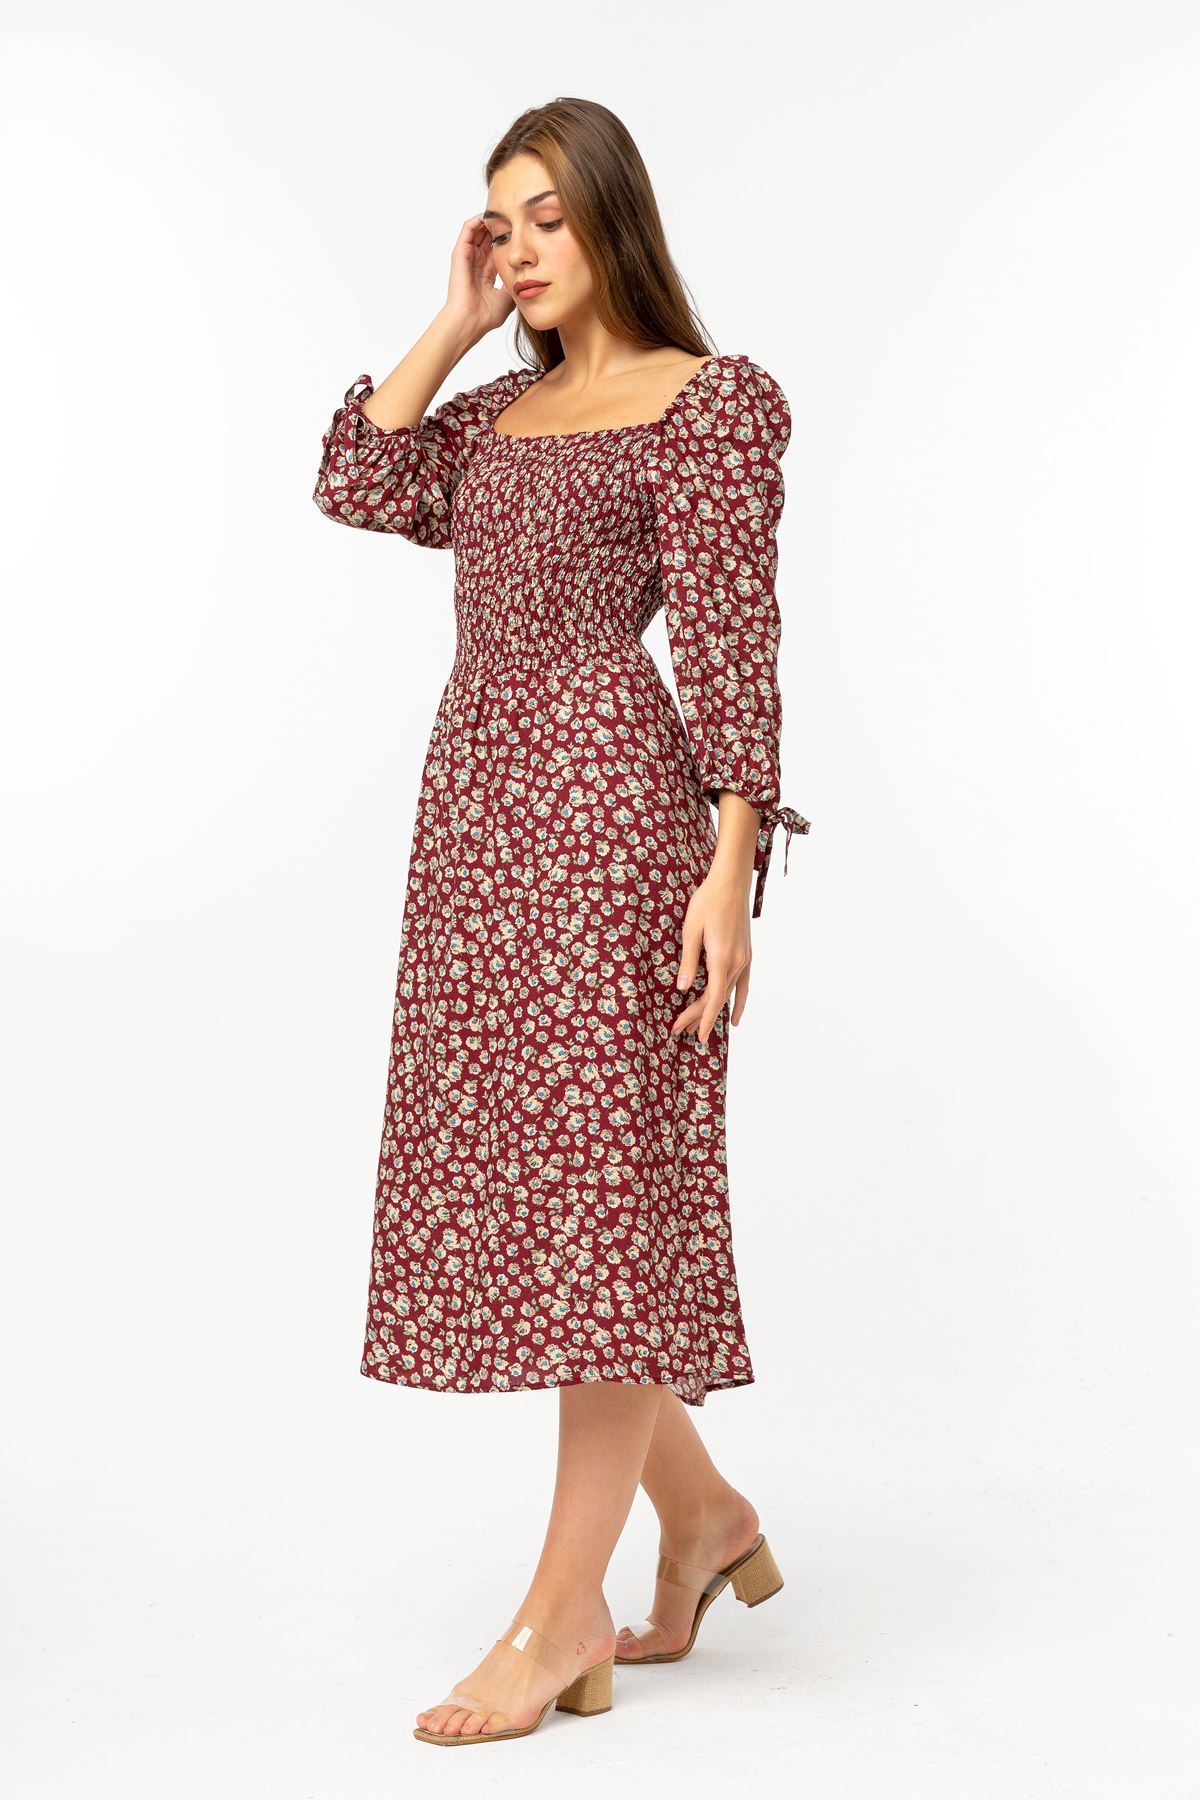 Square Neckline Tight Fit Floral Print Women Dress - Burgundy